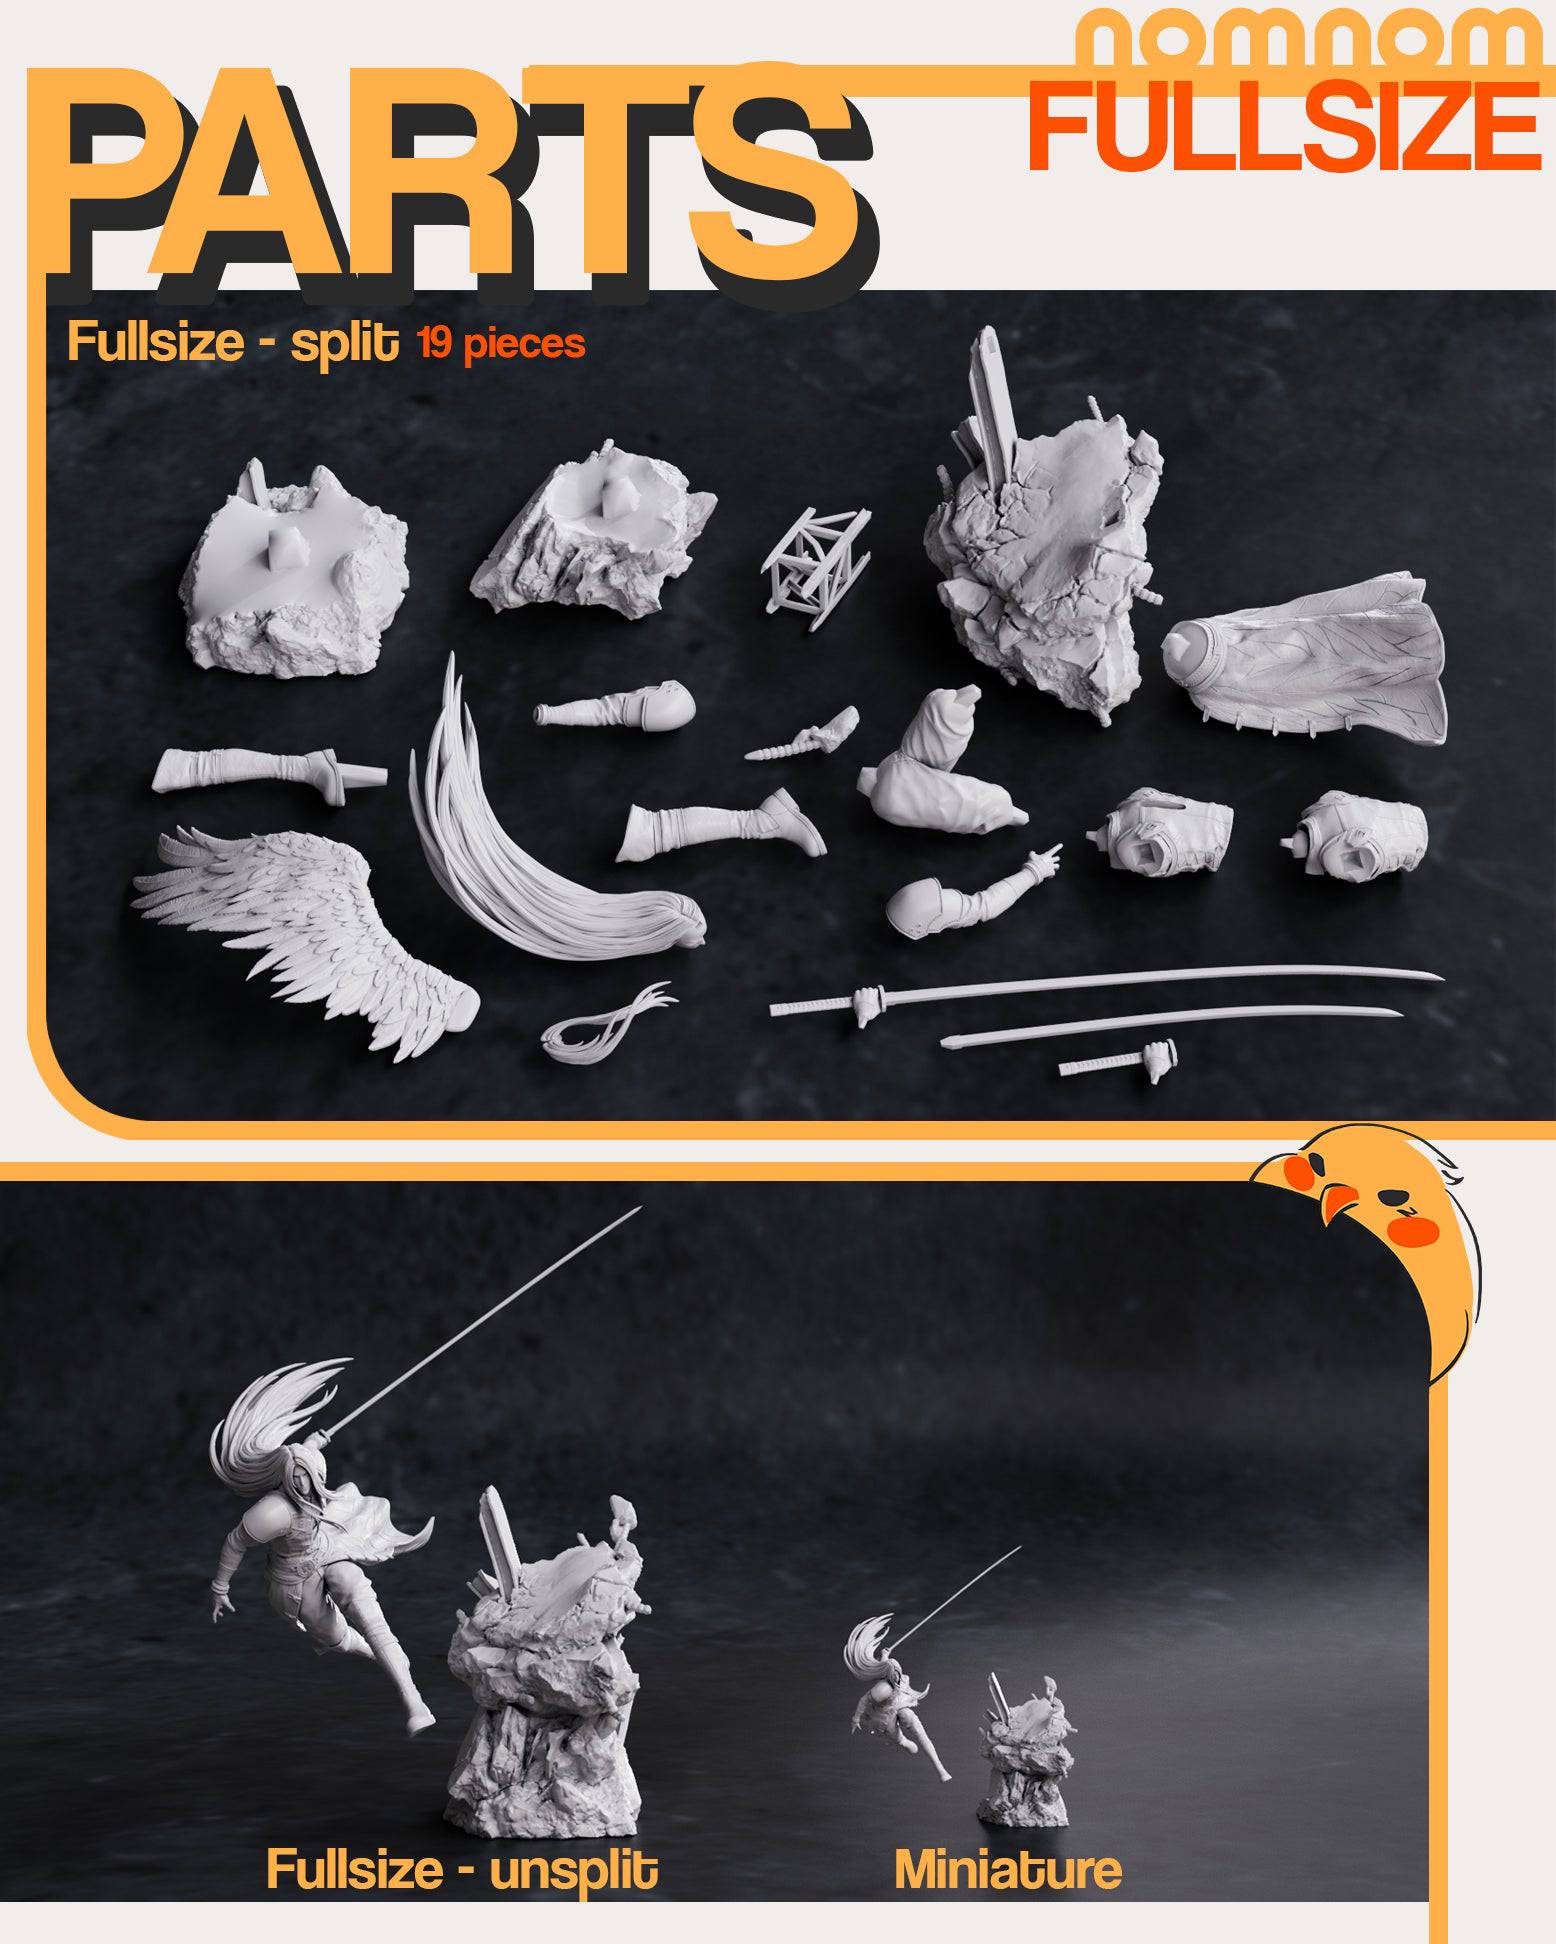 One-Winged Angel | Resin Garage Kit Sculpture Anime Video Game Fan Art Statue | Nomnom Figures - Tattles Told 3D